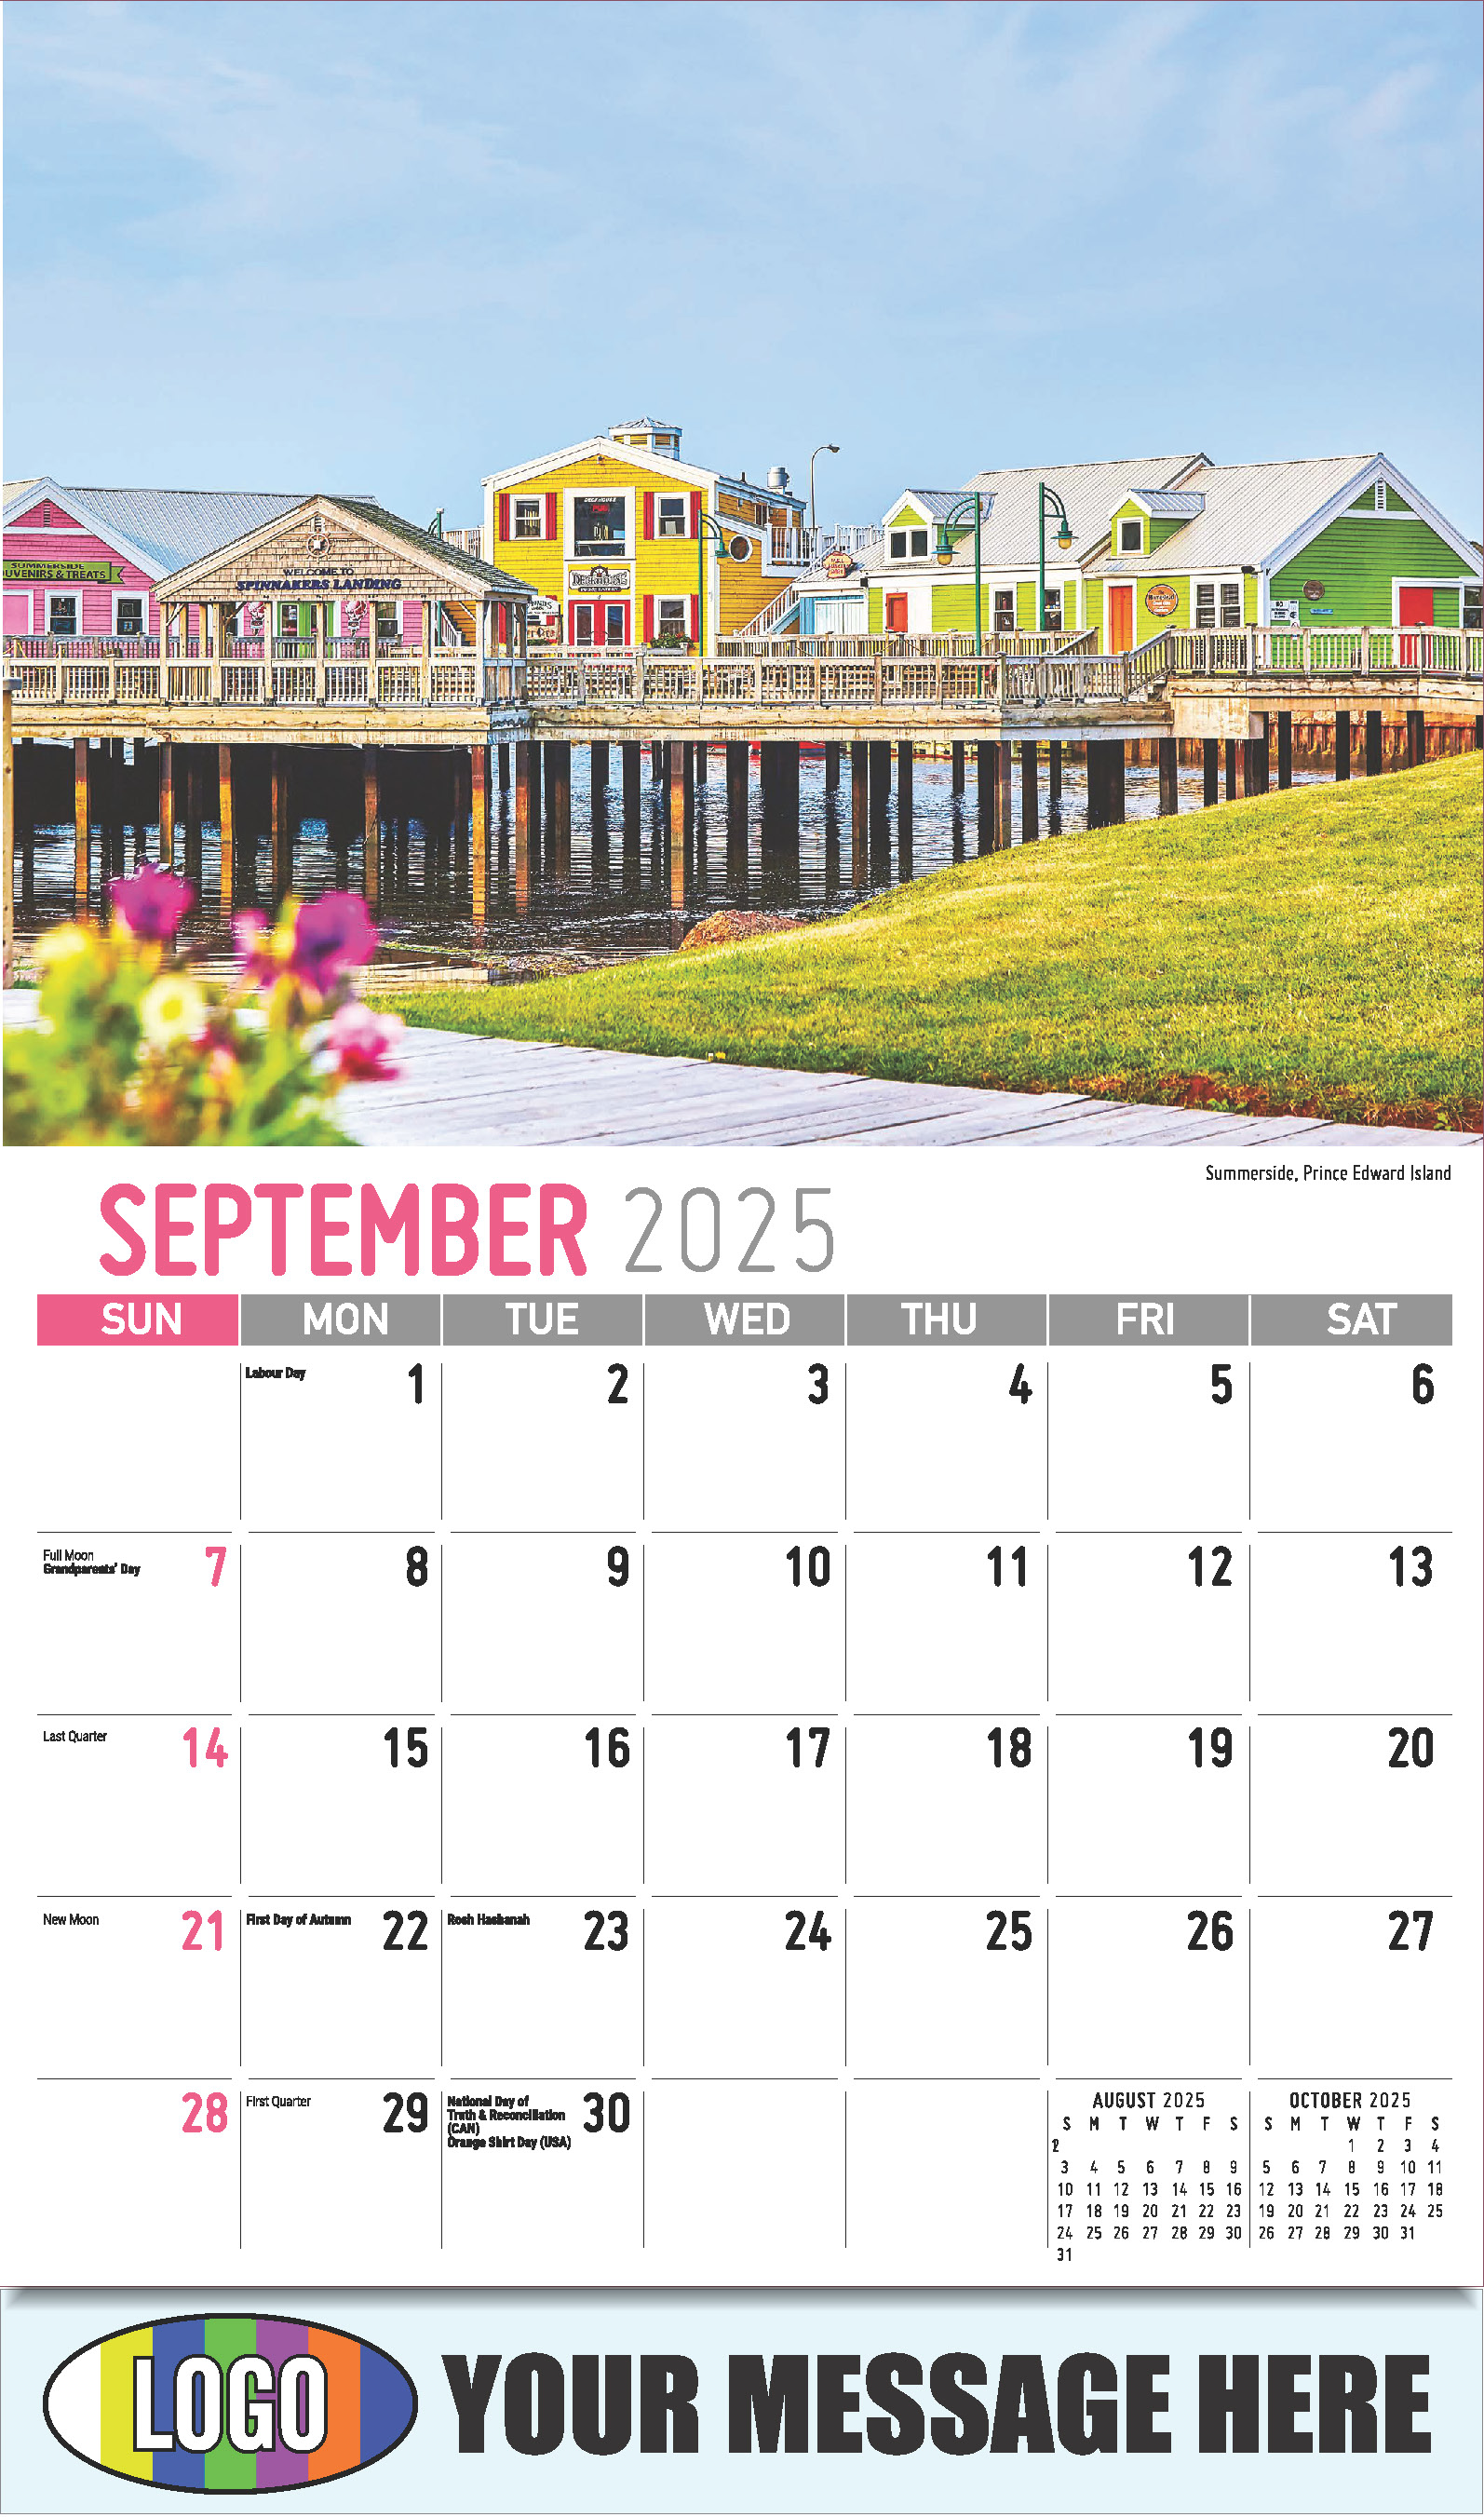 Atlantic Canada Scenic 2025 Business Promotion Calendar - September